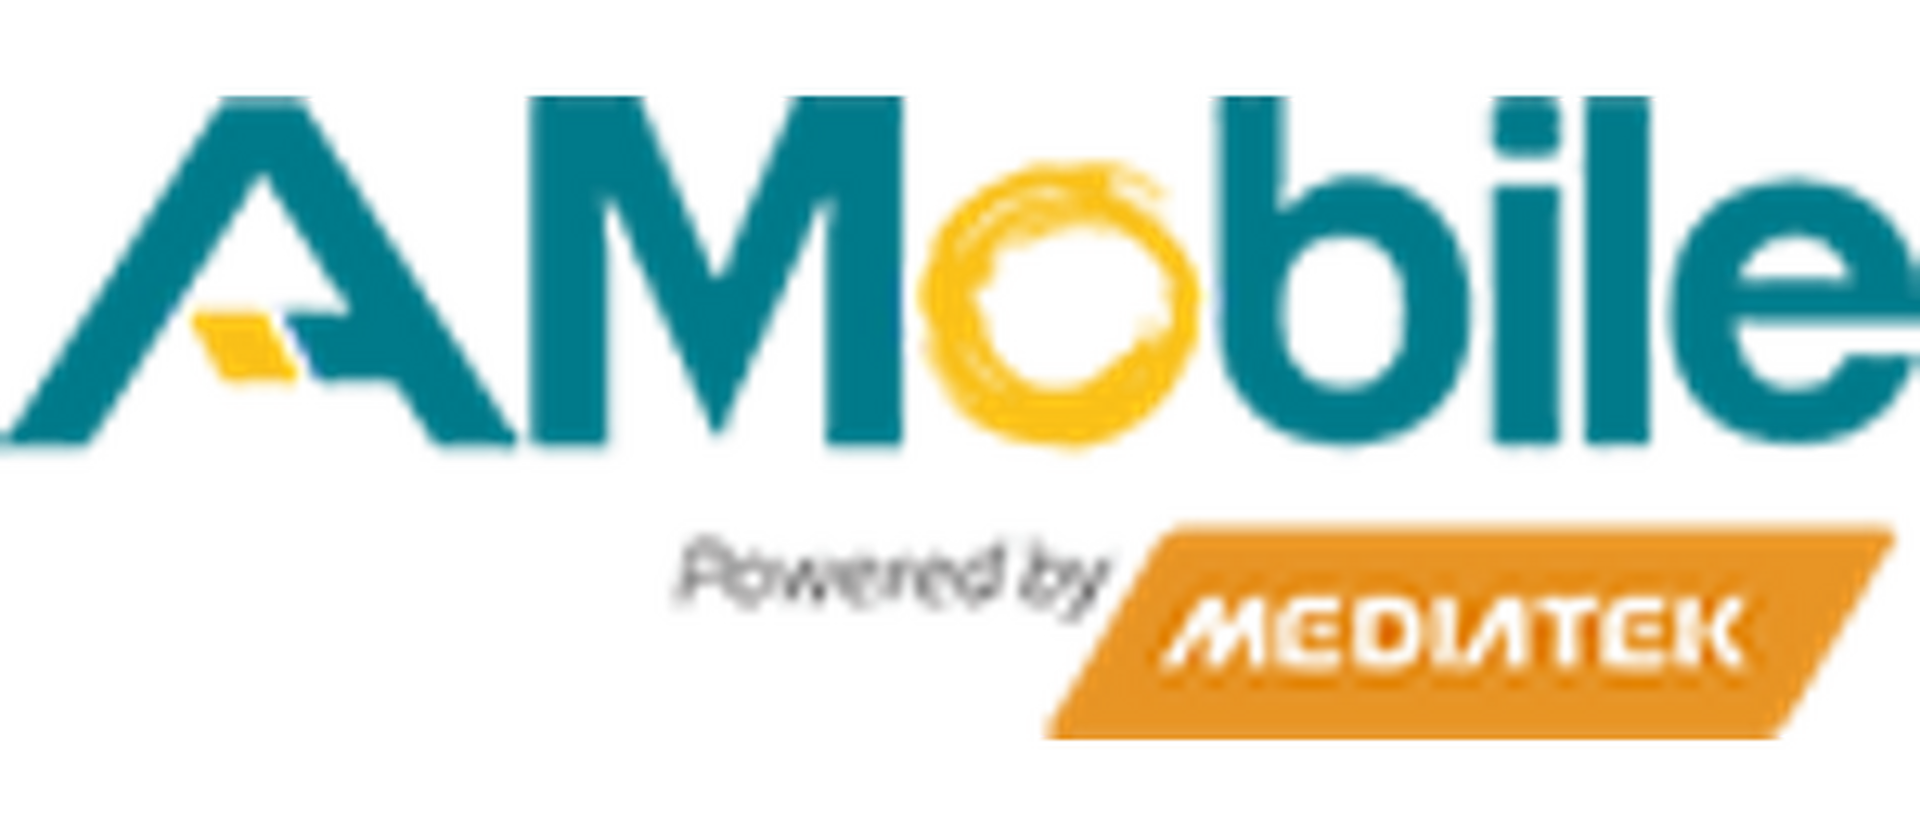 Amobile logo